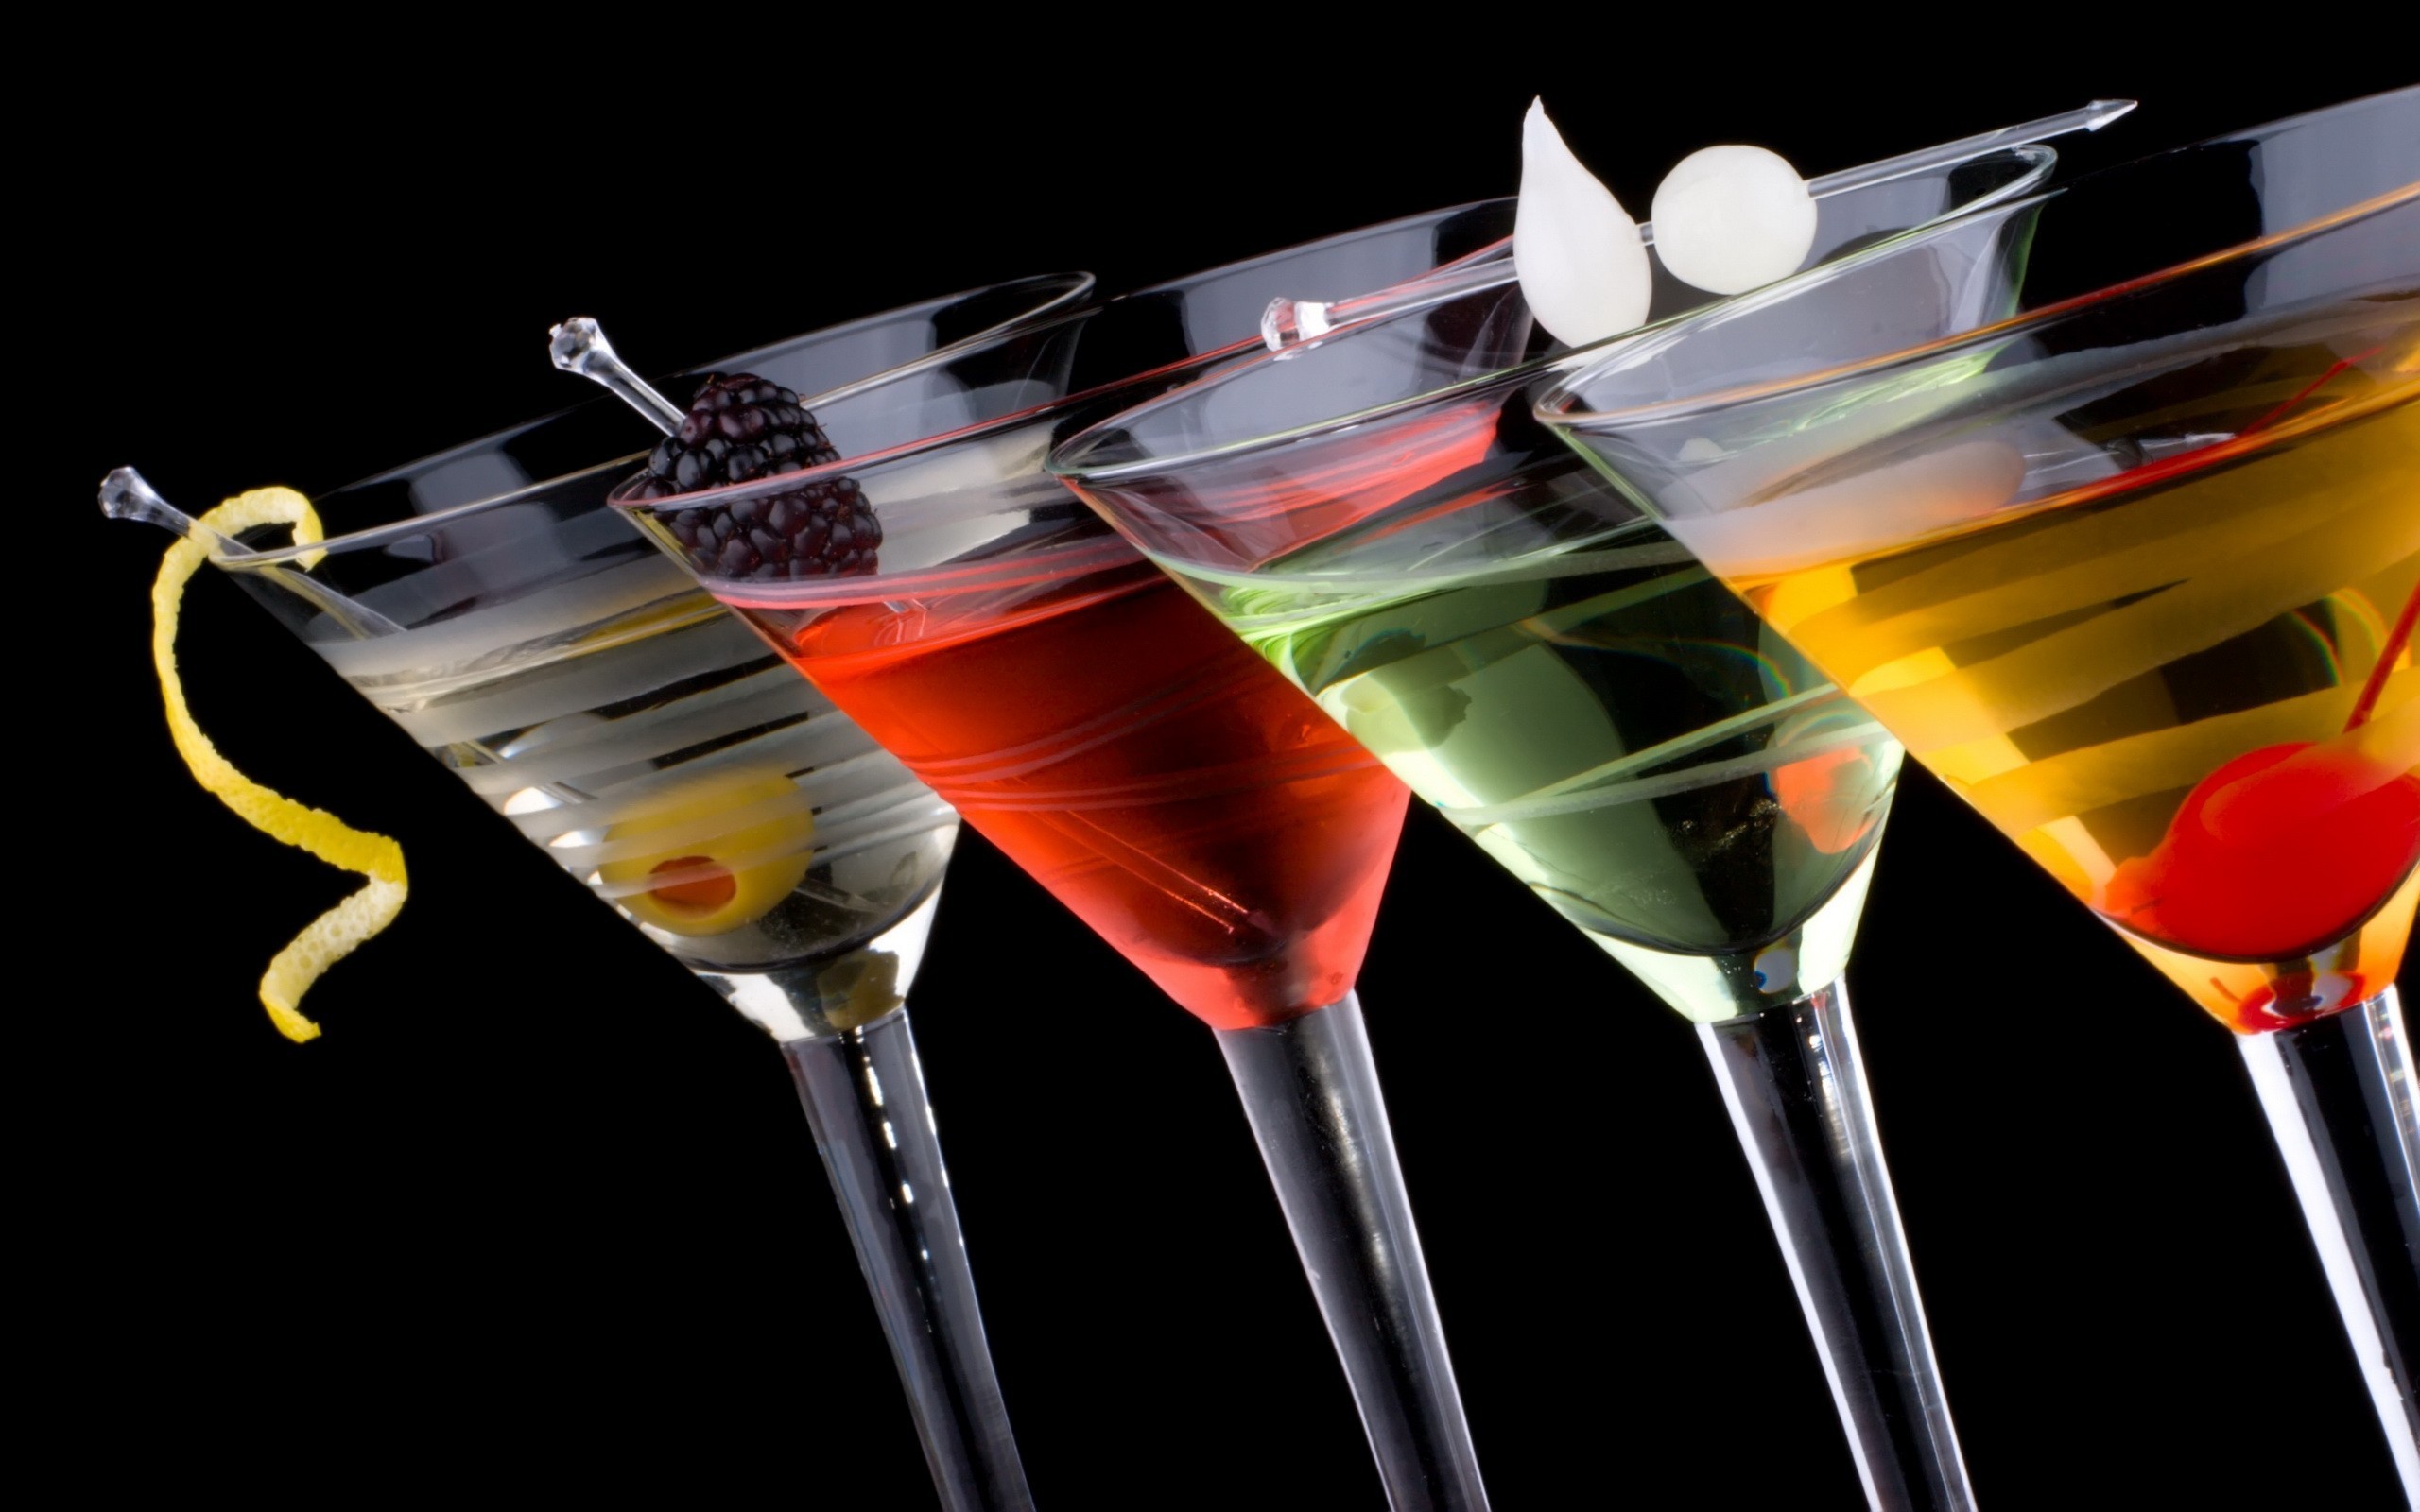 General 2560x1600 cocktails drinking glass food alcohol digital art simple background black background